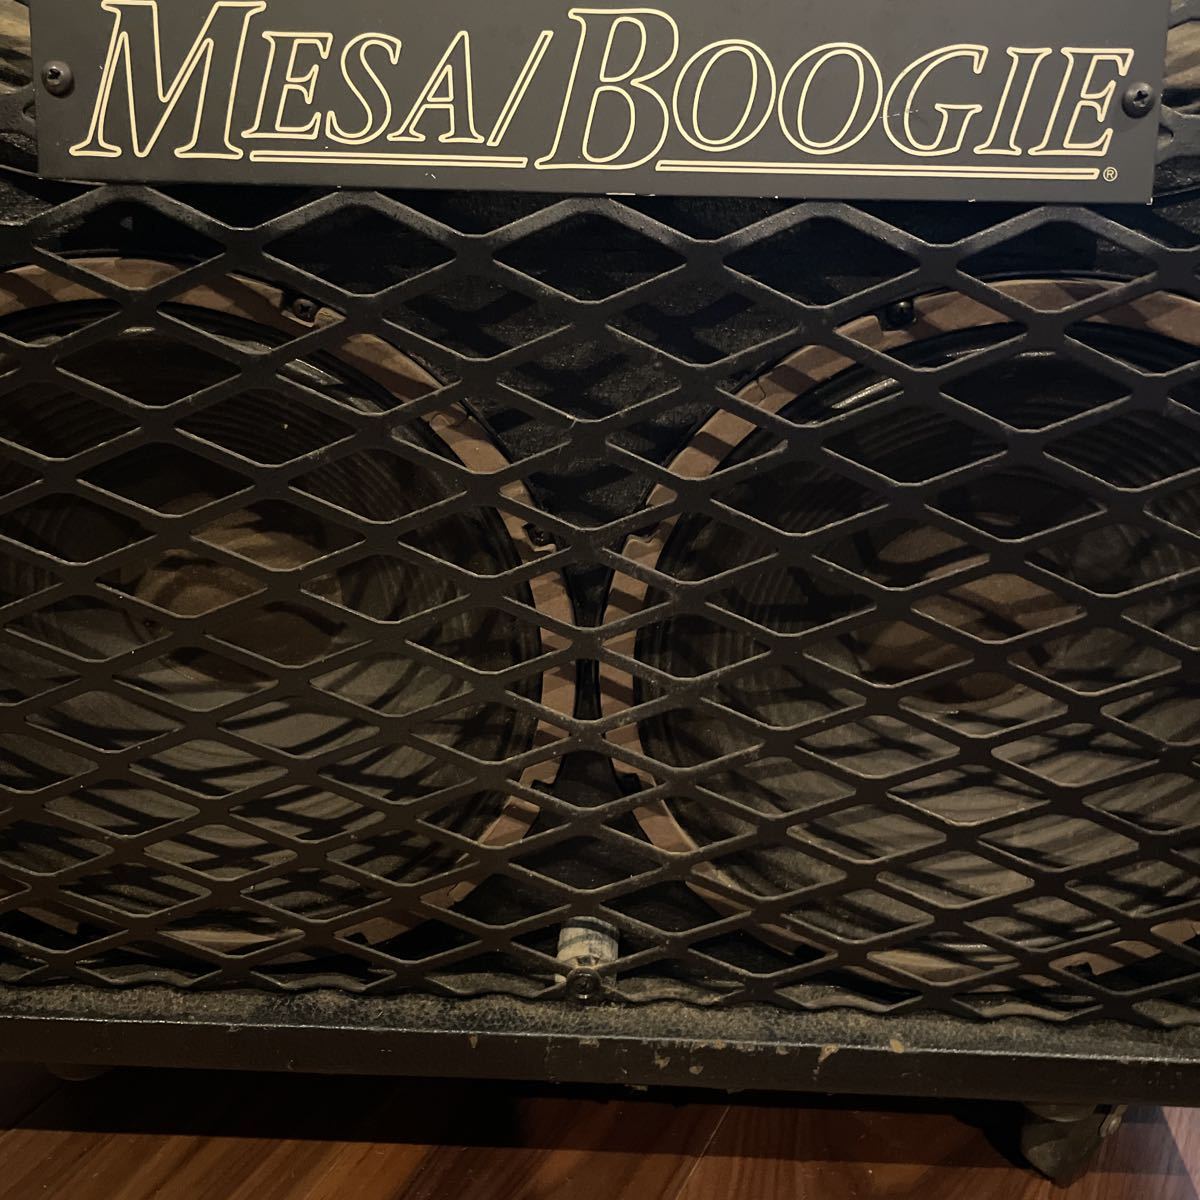 Mesa Boogieメサブギー スピーカーキャビネット 412 4×12 Black Shadow MC-90鉄網 - 7